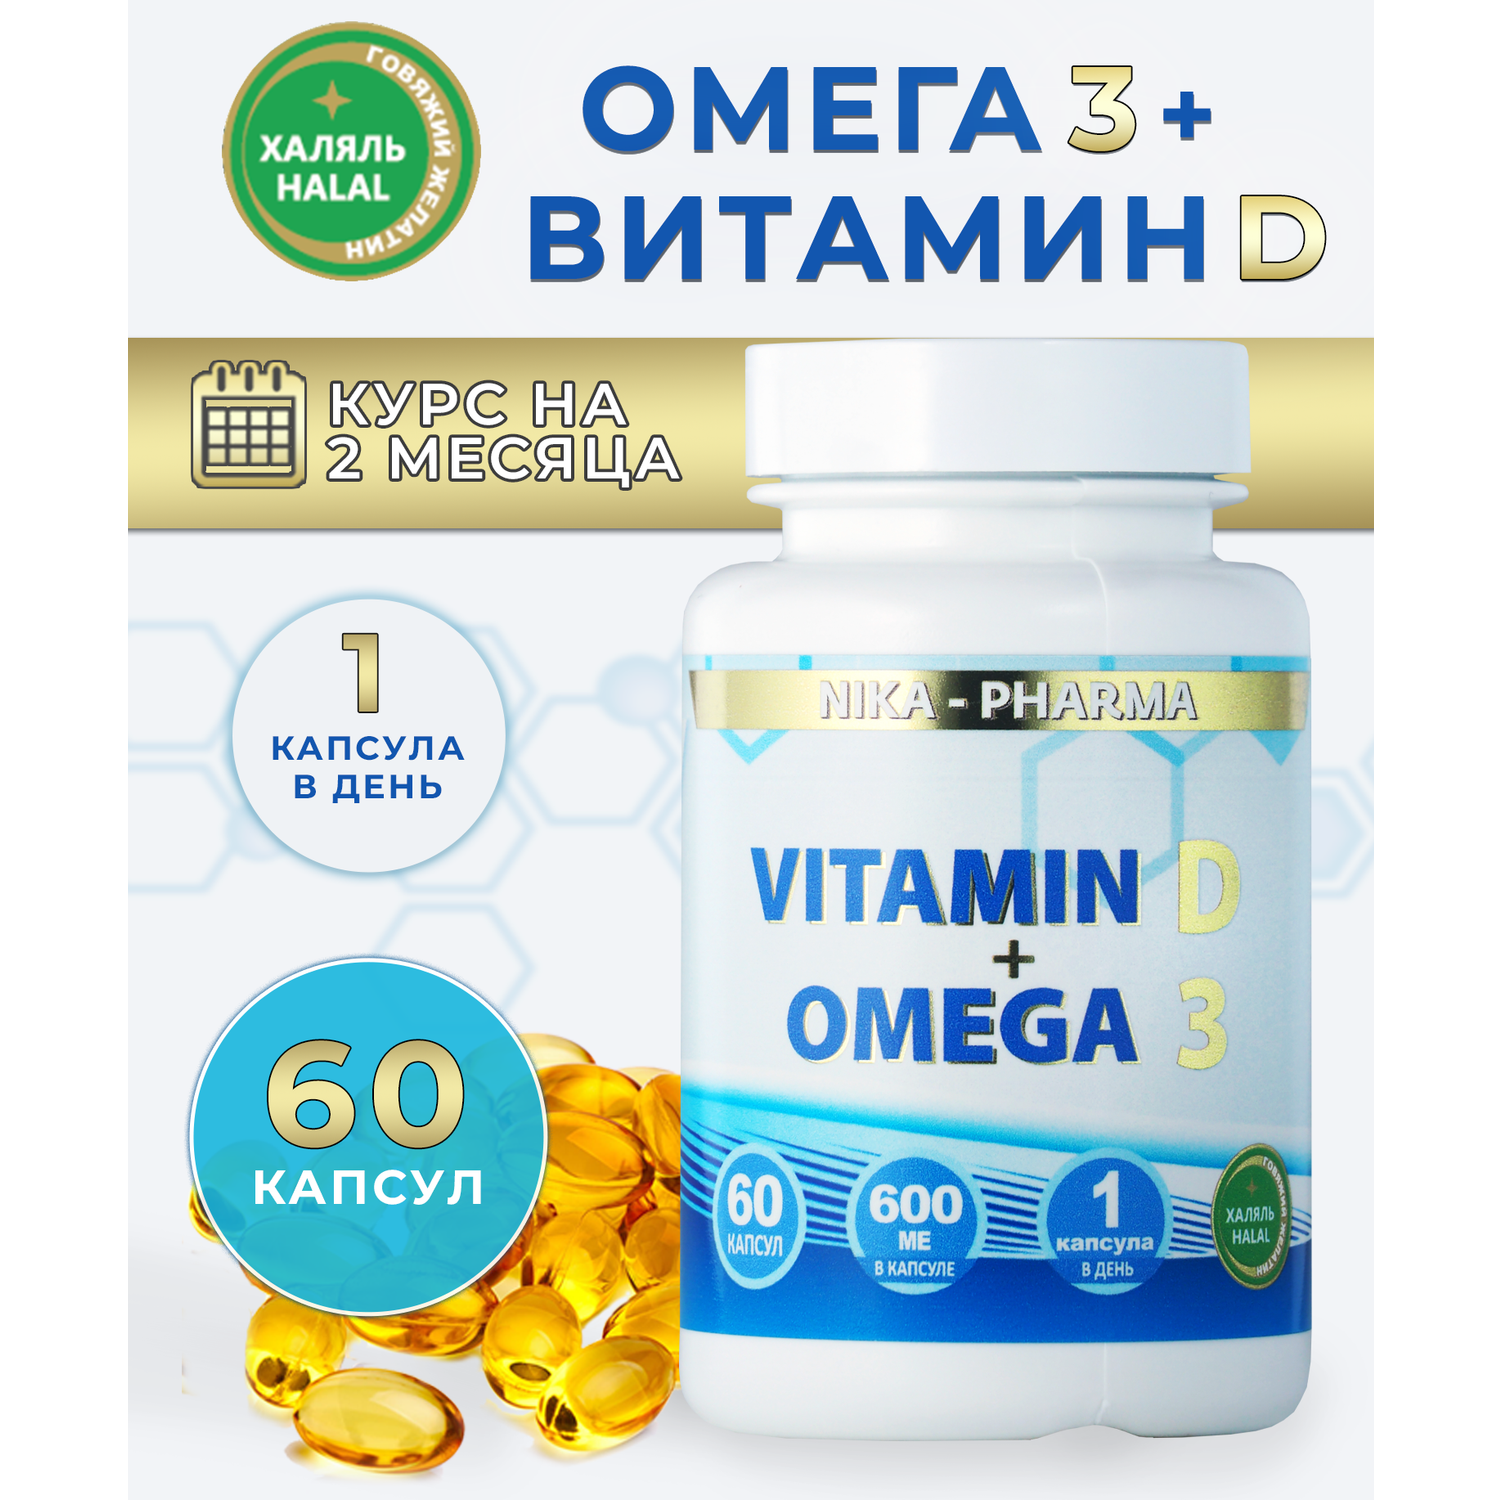 Витамин Д + Омега 3 NIKA-PHARMA Халяль - фото 2